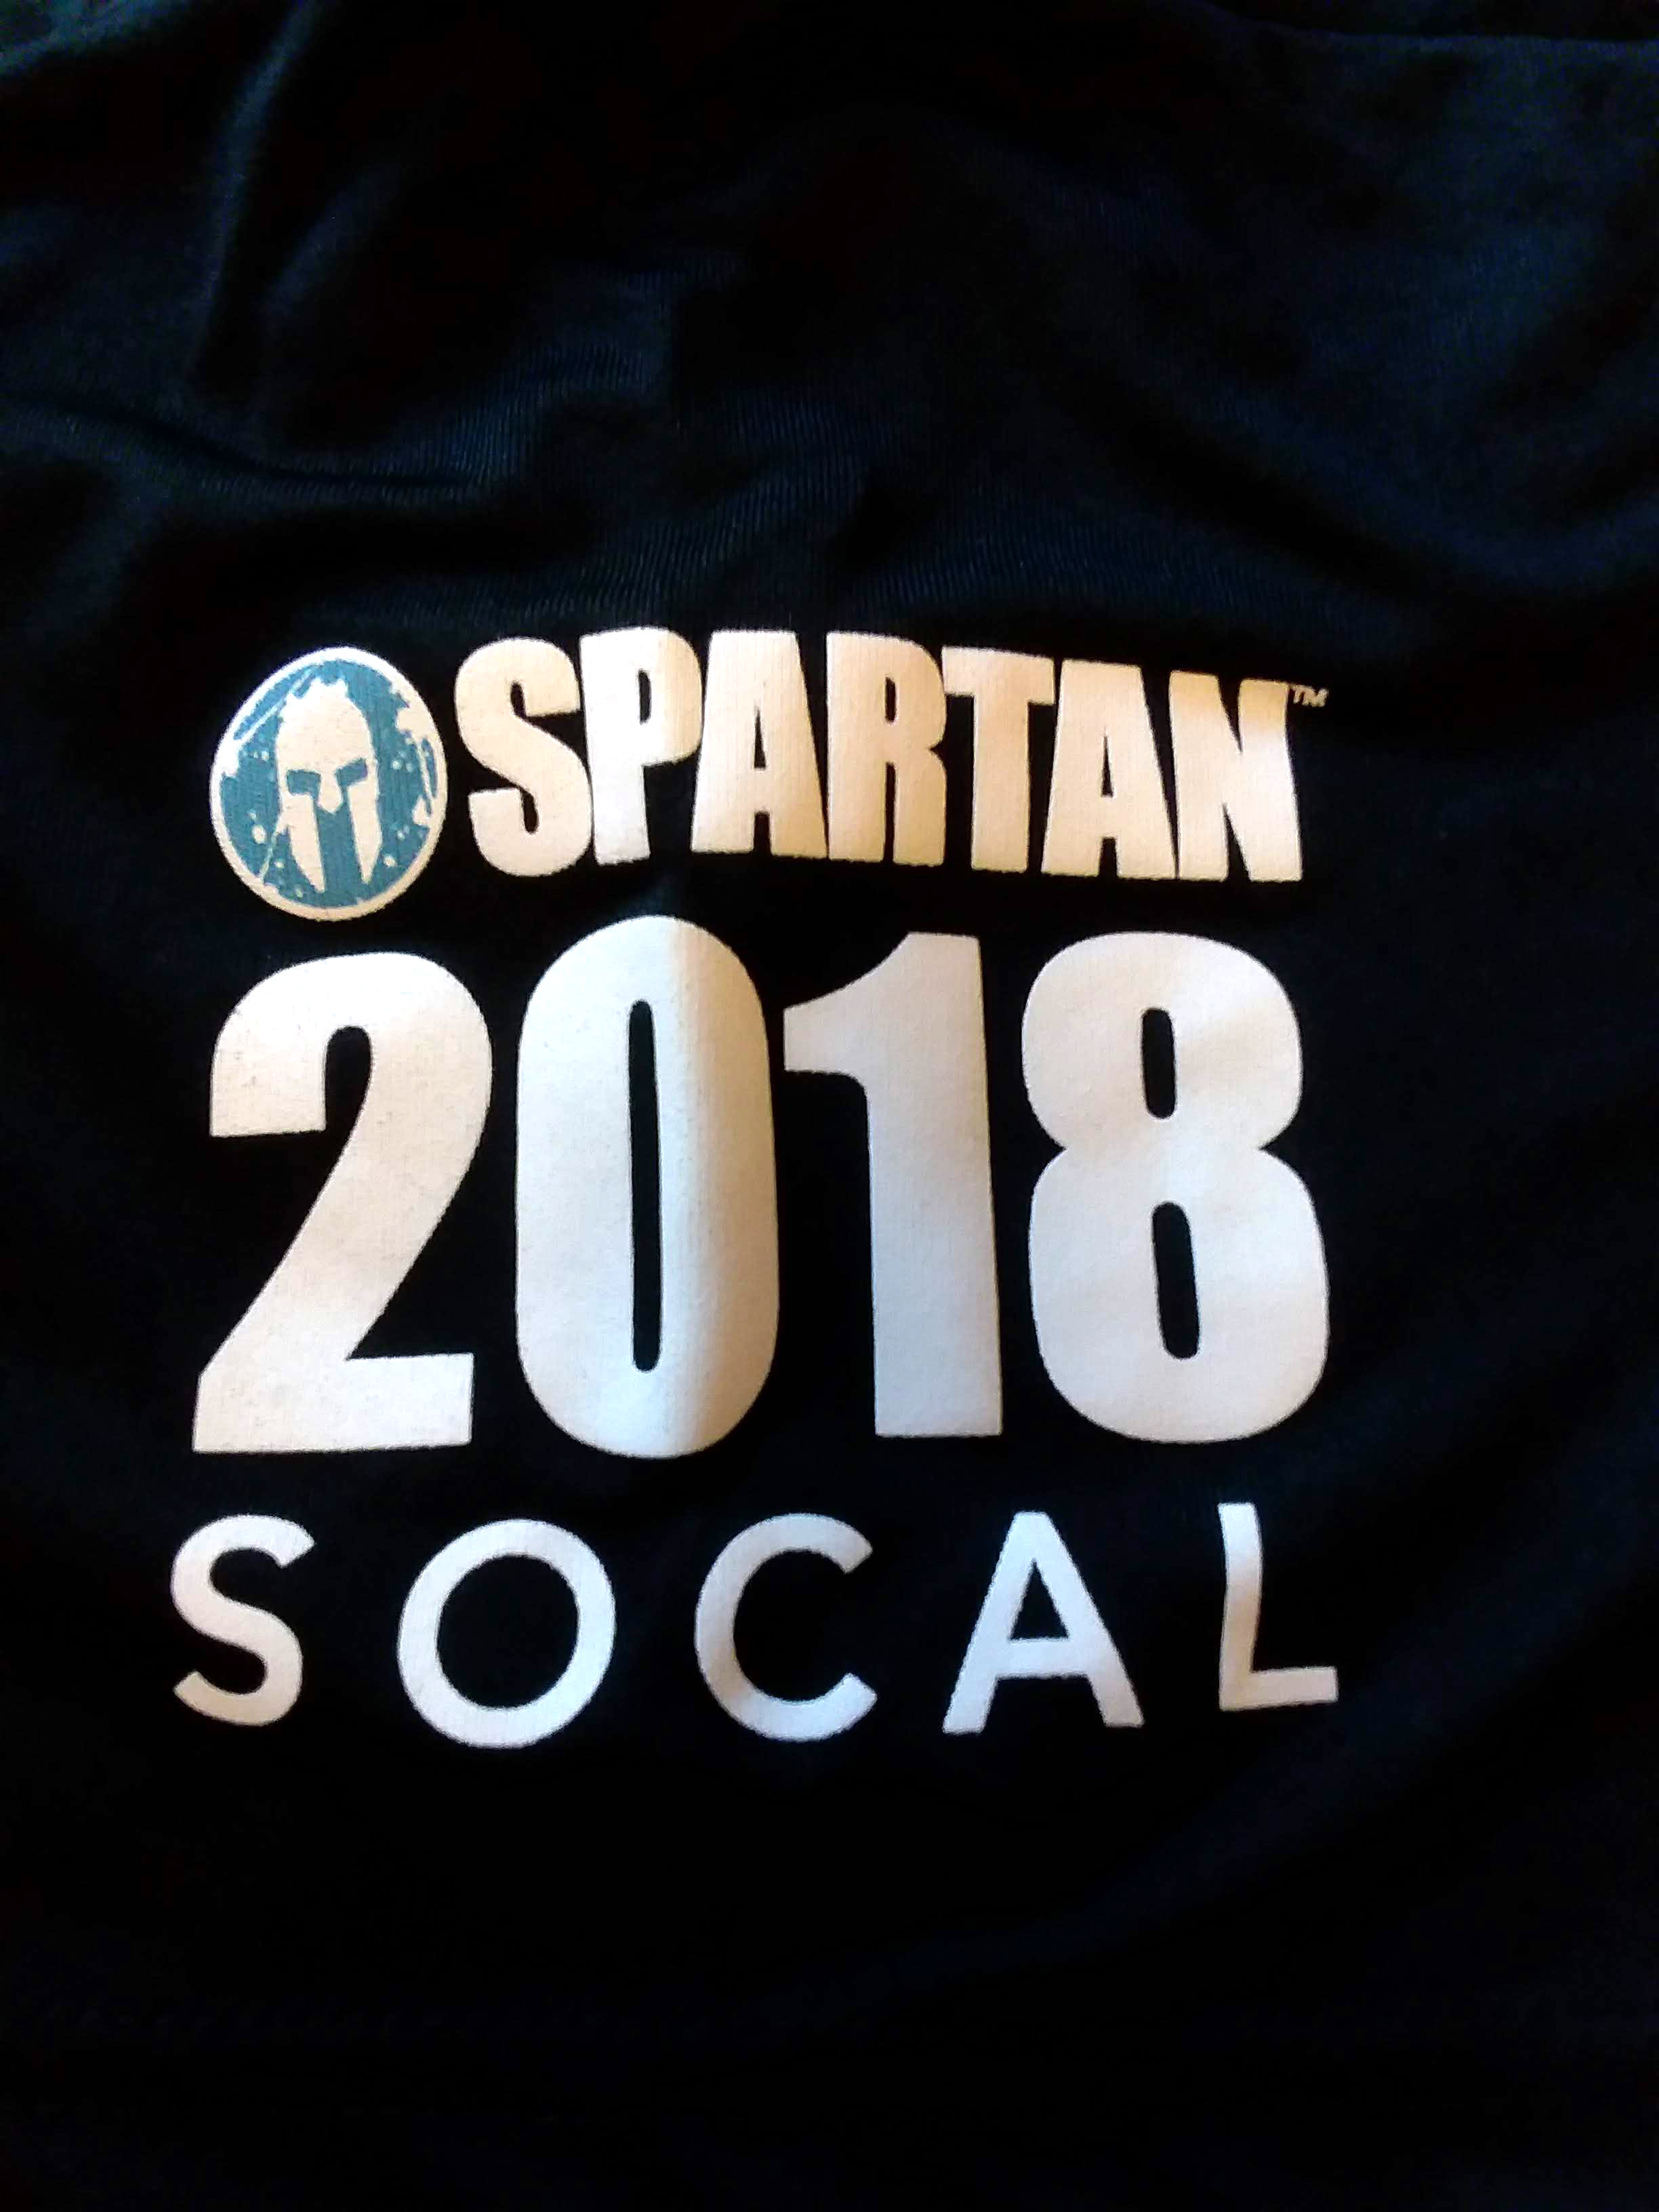 Spartan_Super_Shirt_Venue_2018_Asheville_Sleeve